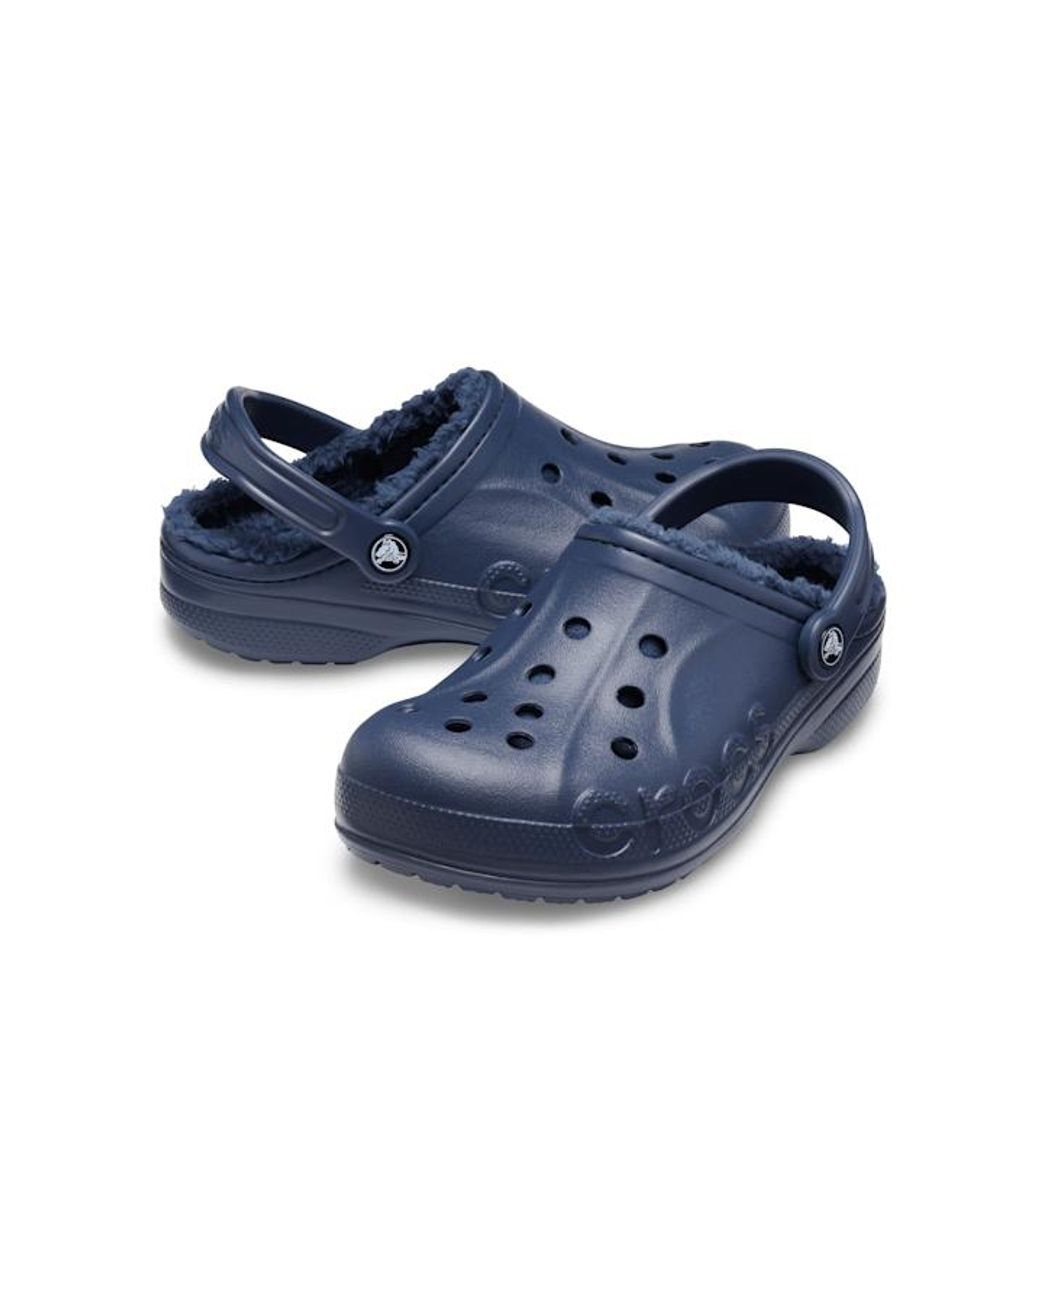 Crocs™ Baya Lined Clog in Navy/Navy (Blue) | Lyst